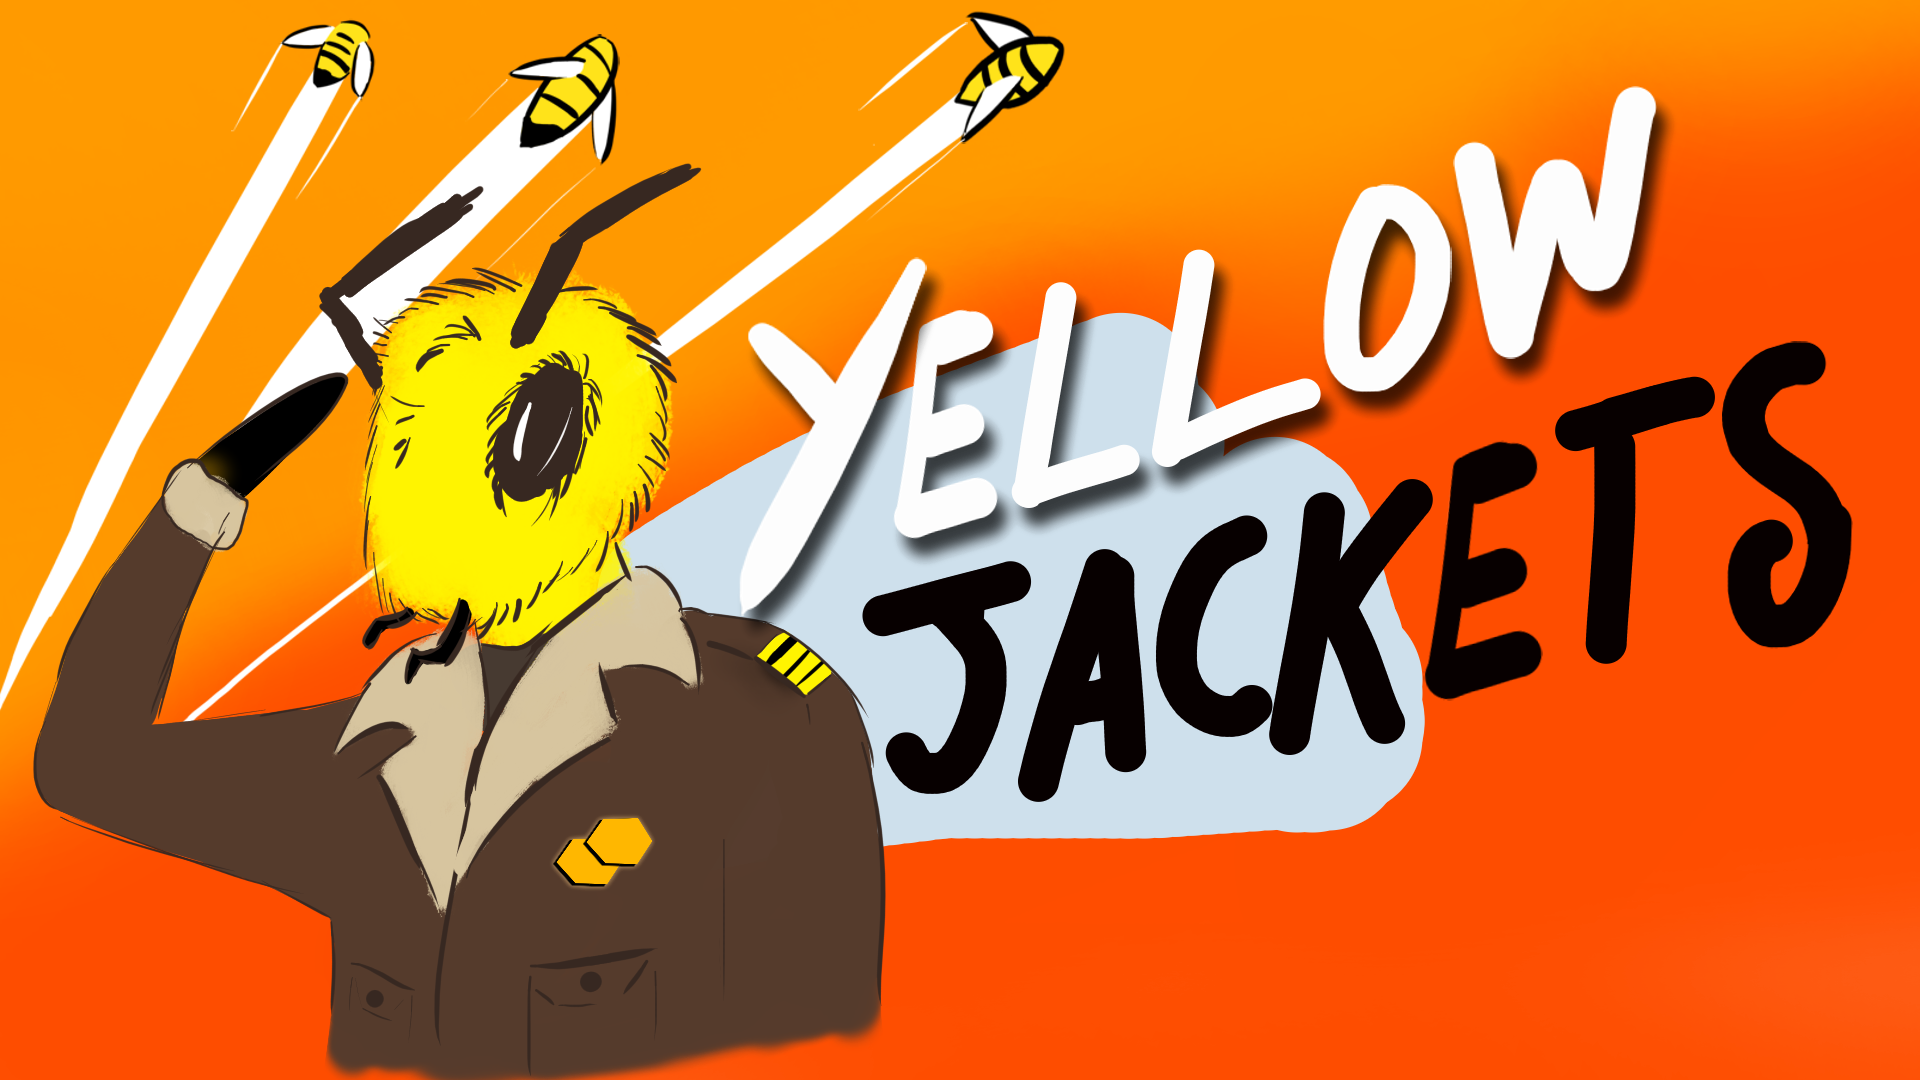 Yellow Jackets demo by BOBROB